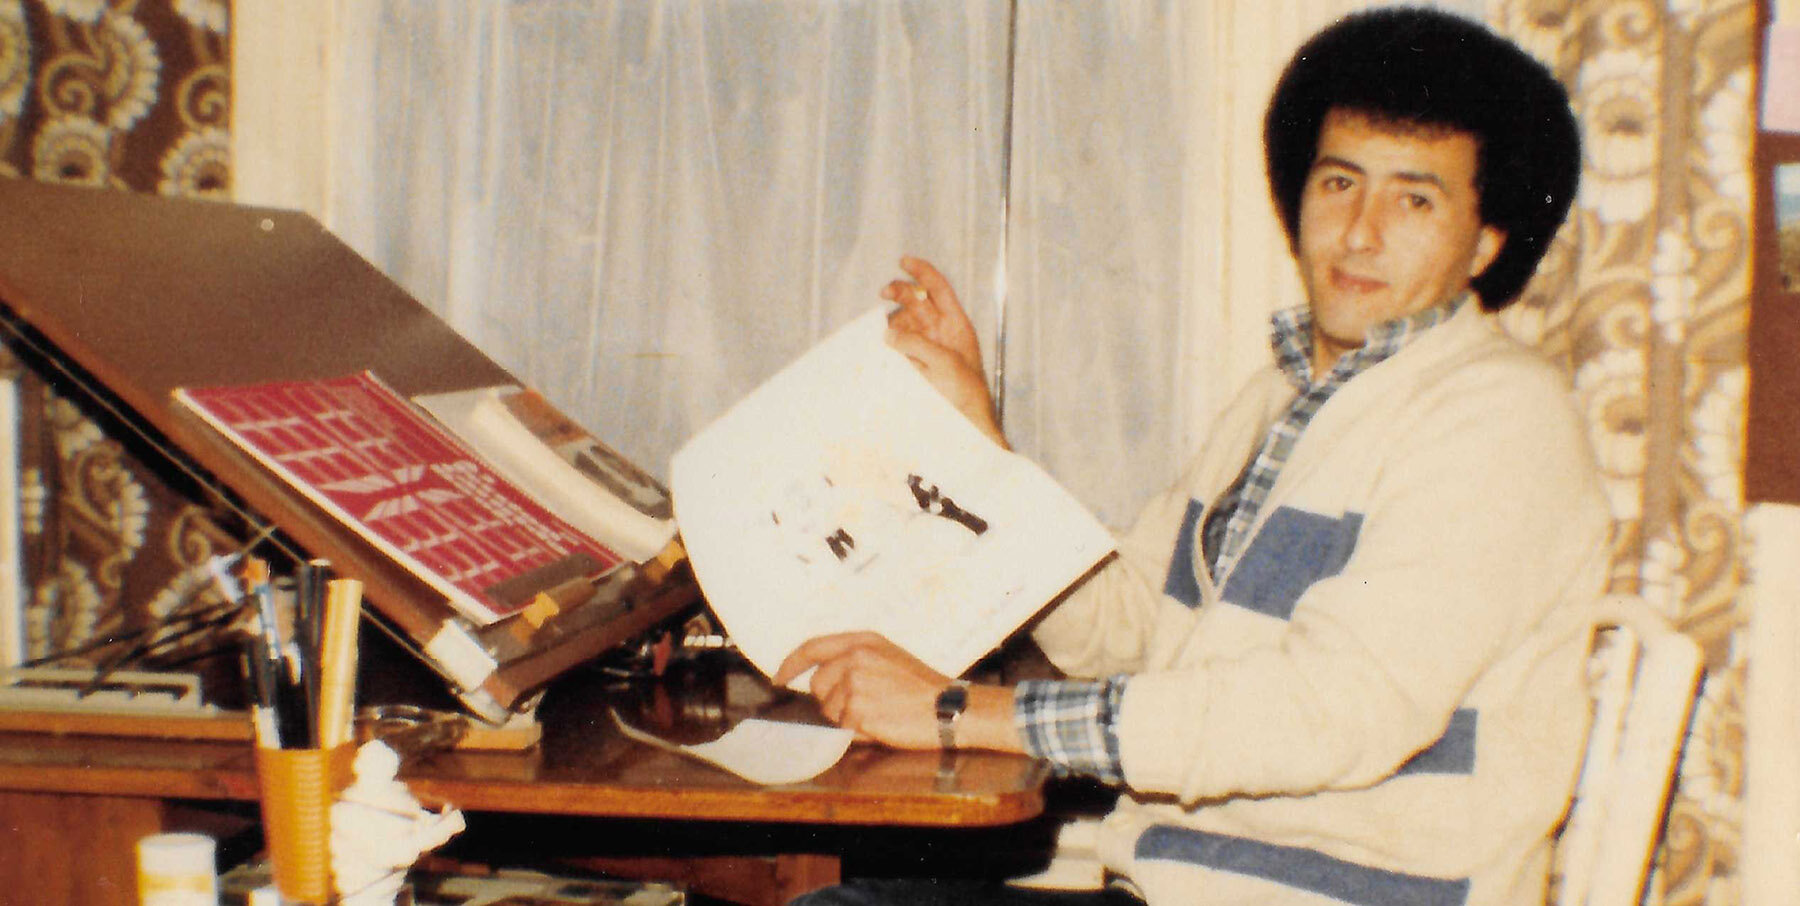 Hasan “Alsatoor” Dhaimish at his drawing desk in Burnley, circa 1980 (courtesy Sherif Dhaimish).